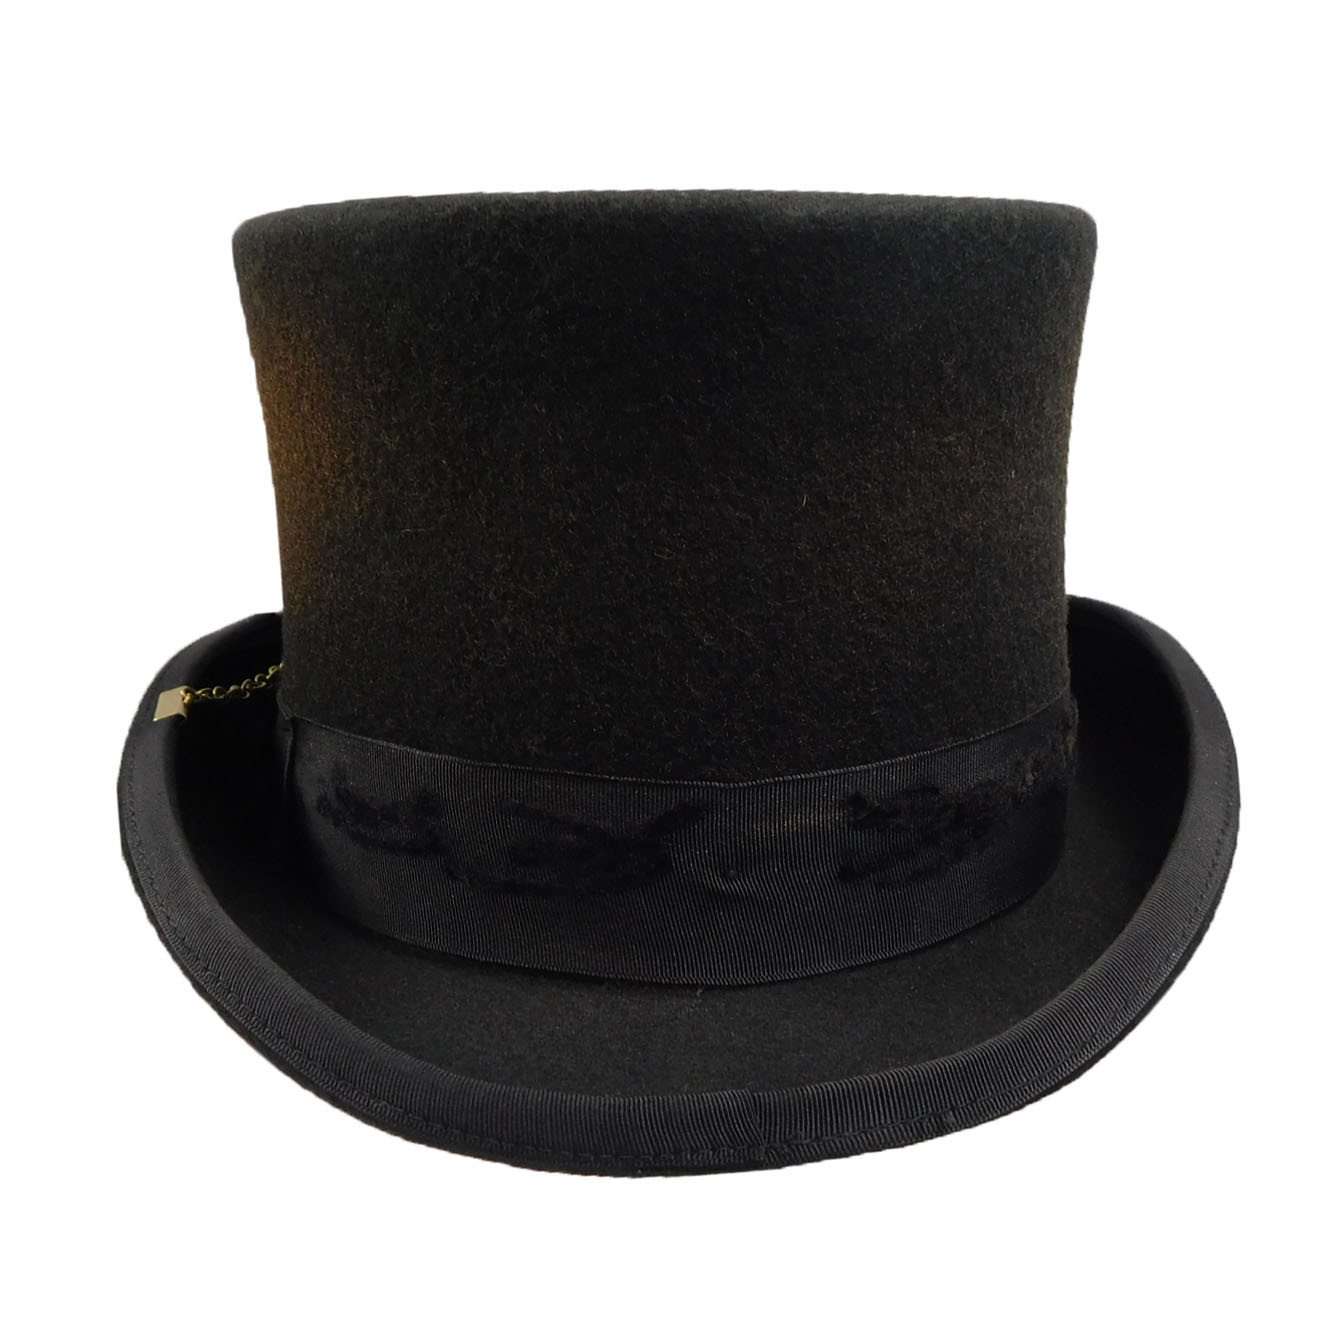 Antiqued Wool Felt Steampunk Top Hat - K. Keith Wool Hat Top Hat Great hats by Karen Keith    